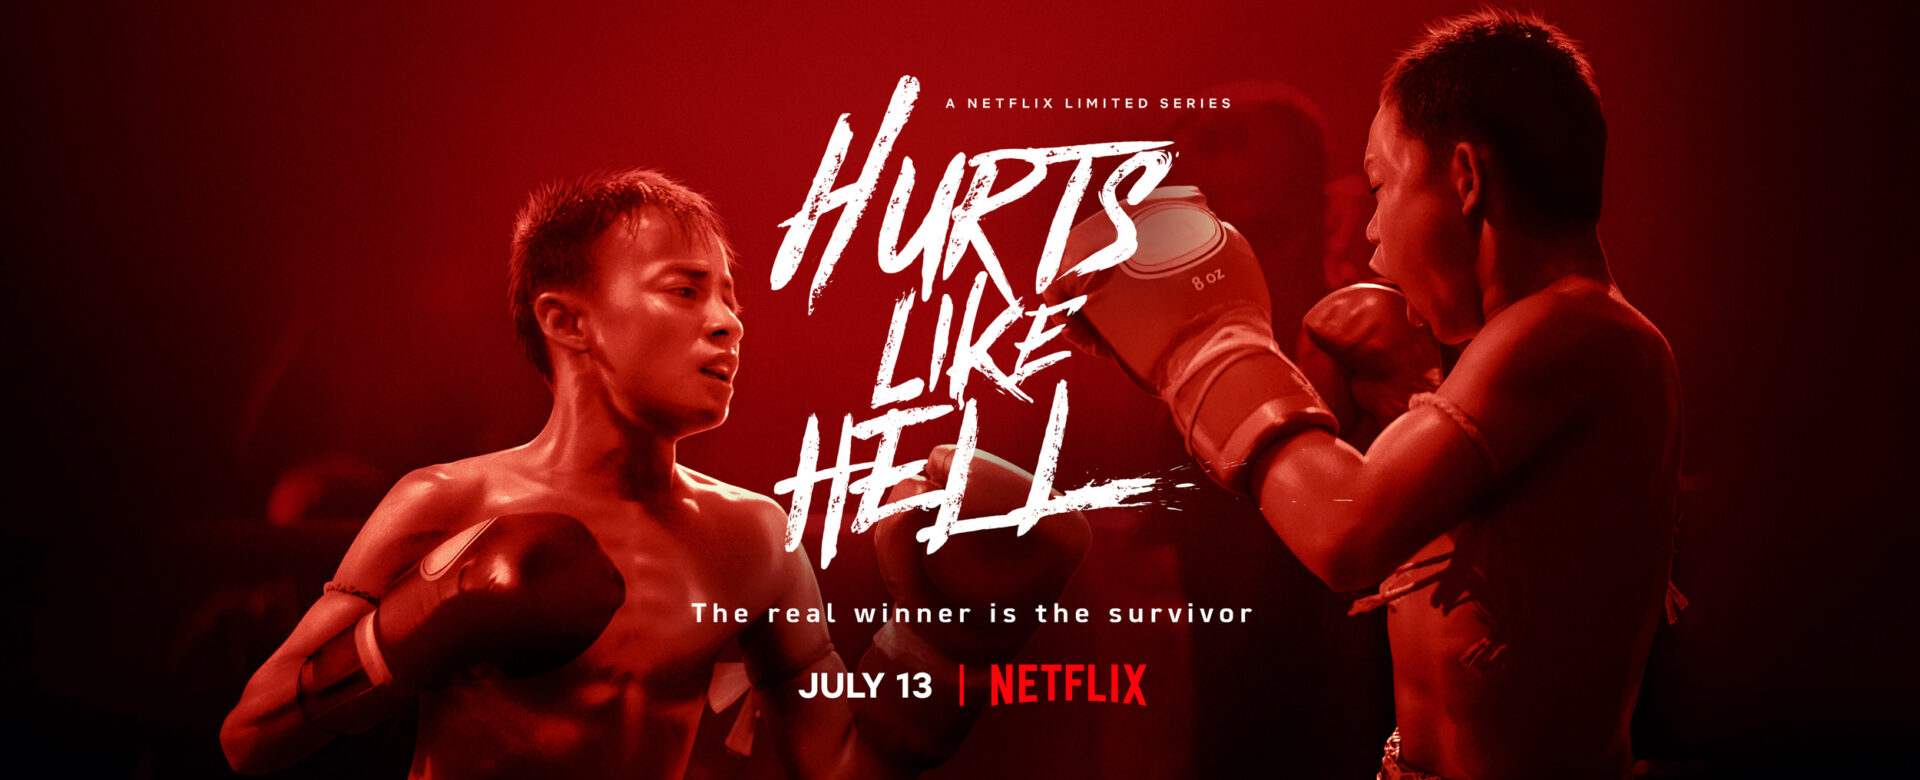 Hurts like Hell Netflix Review Moviehooker